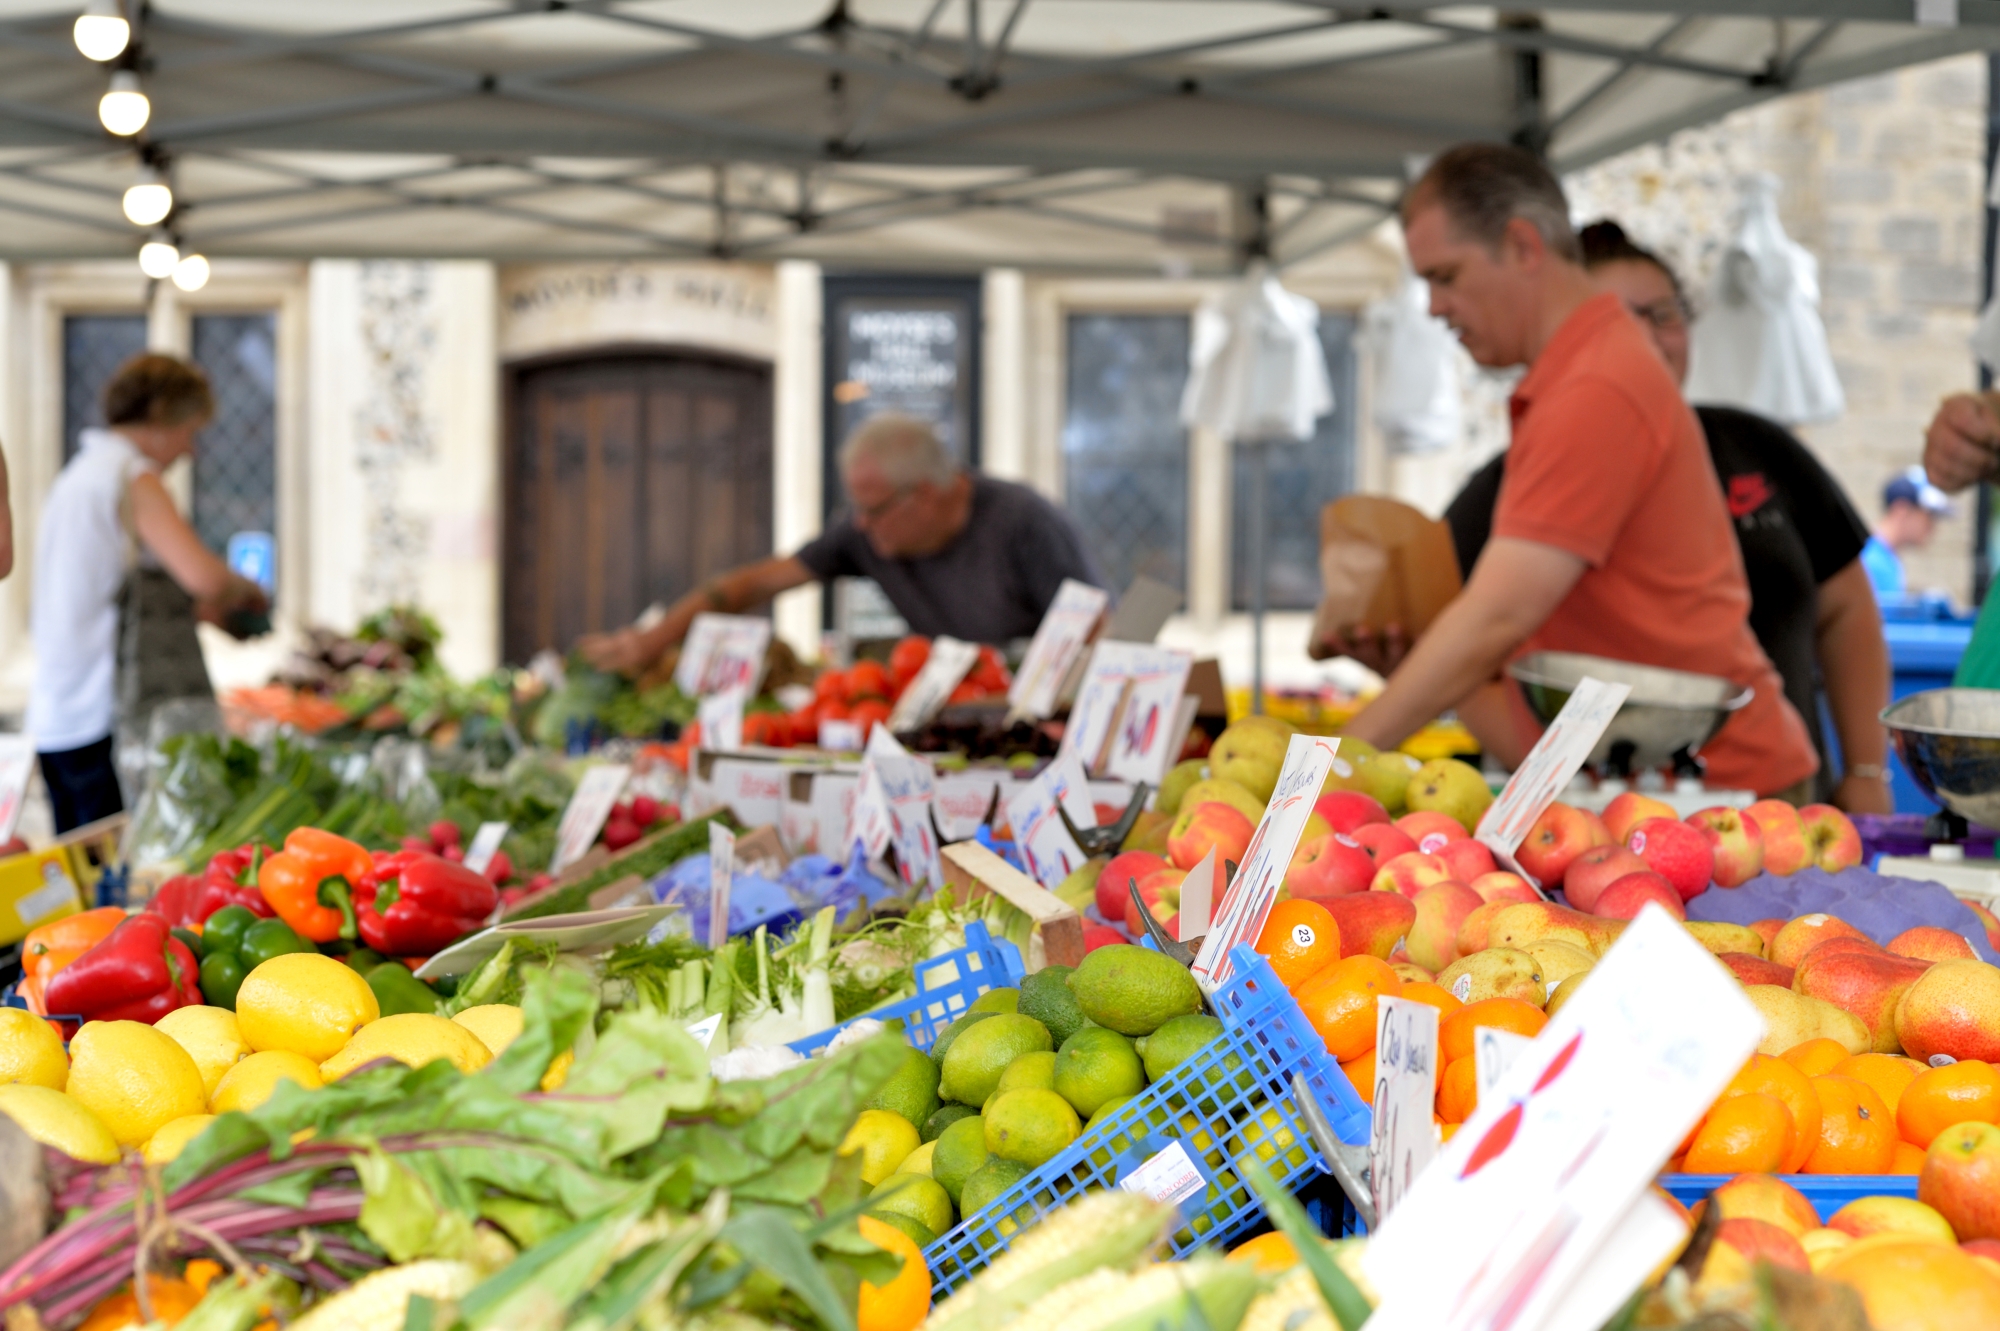 Fruit and veg stall at Bury St Edmunds Market